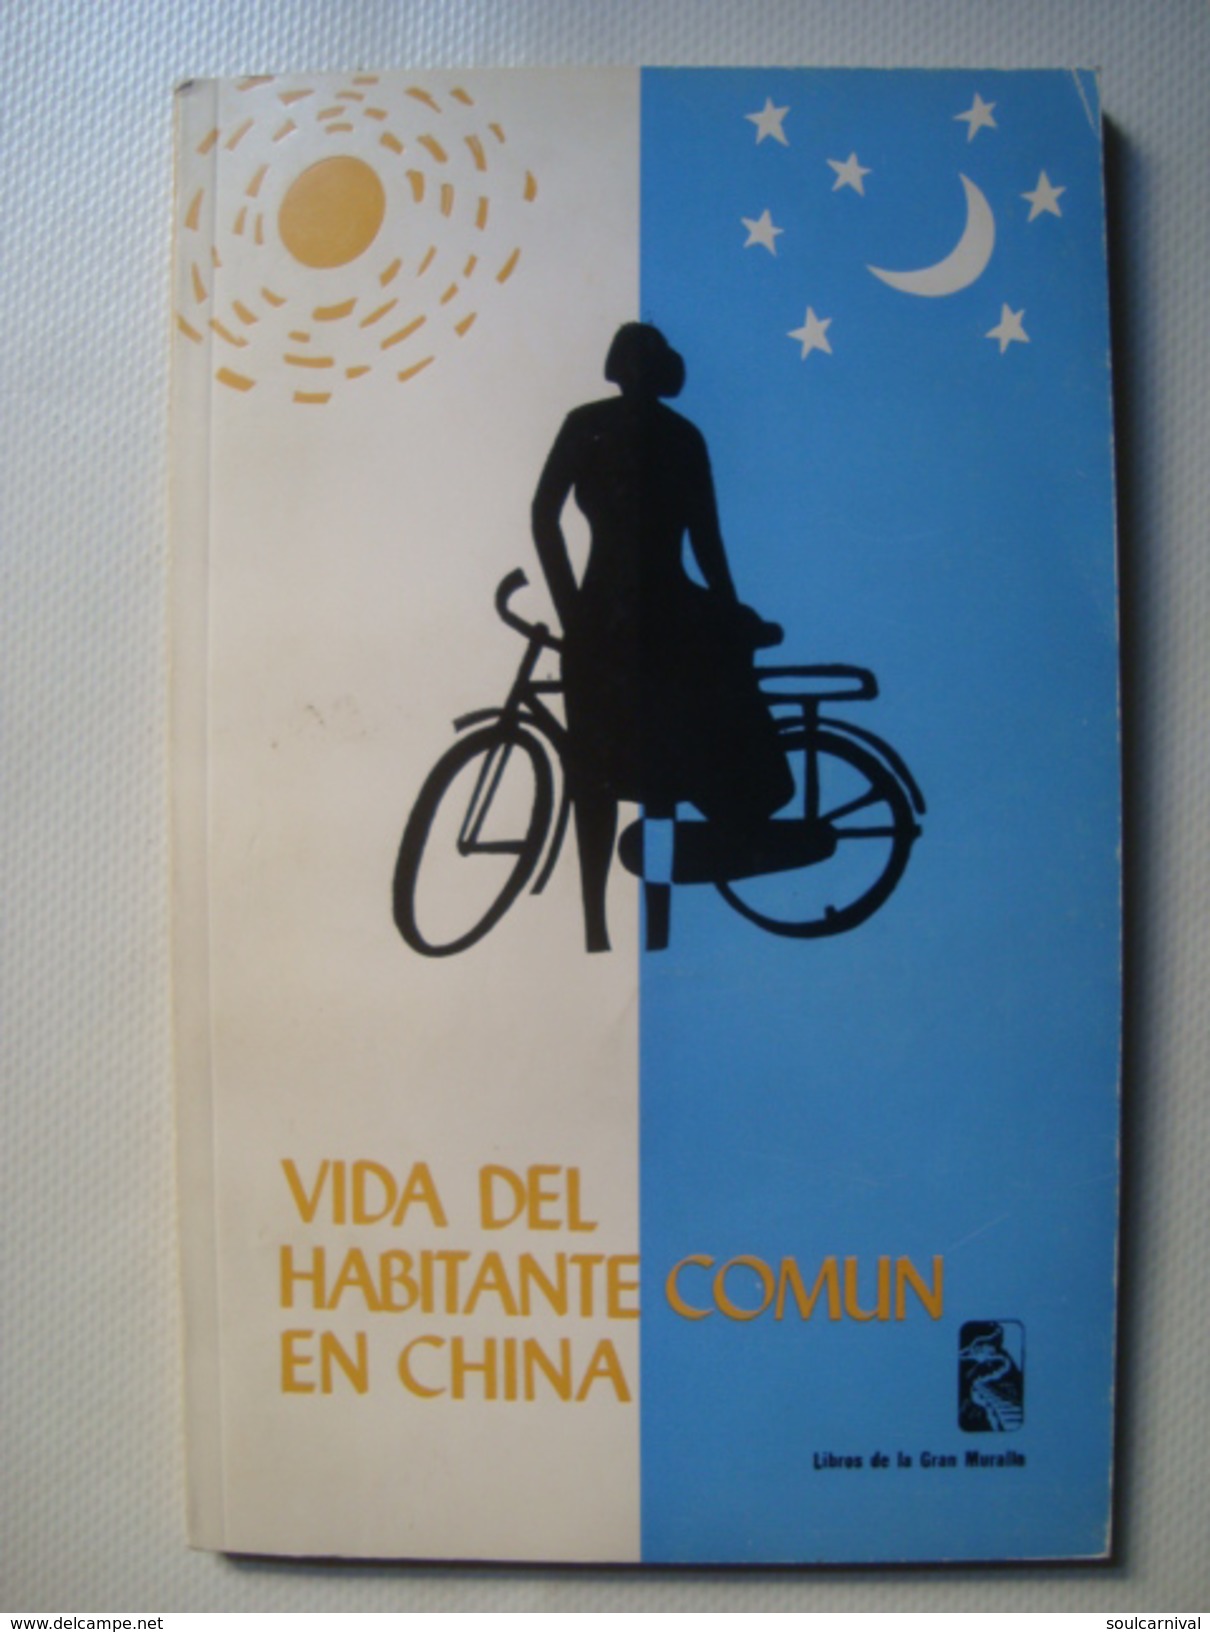 VIDA DEL HABITANTE COMÚN EN CHINA - EDITORIAL CHINA CONSTRUYE, 1988. SPANISH TEXT. B/W PHOTOS. - History & Arts